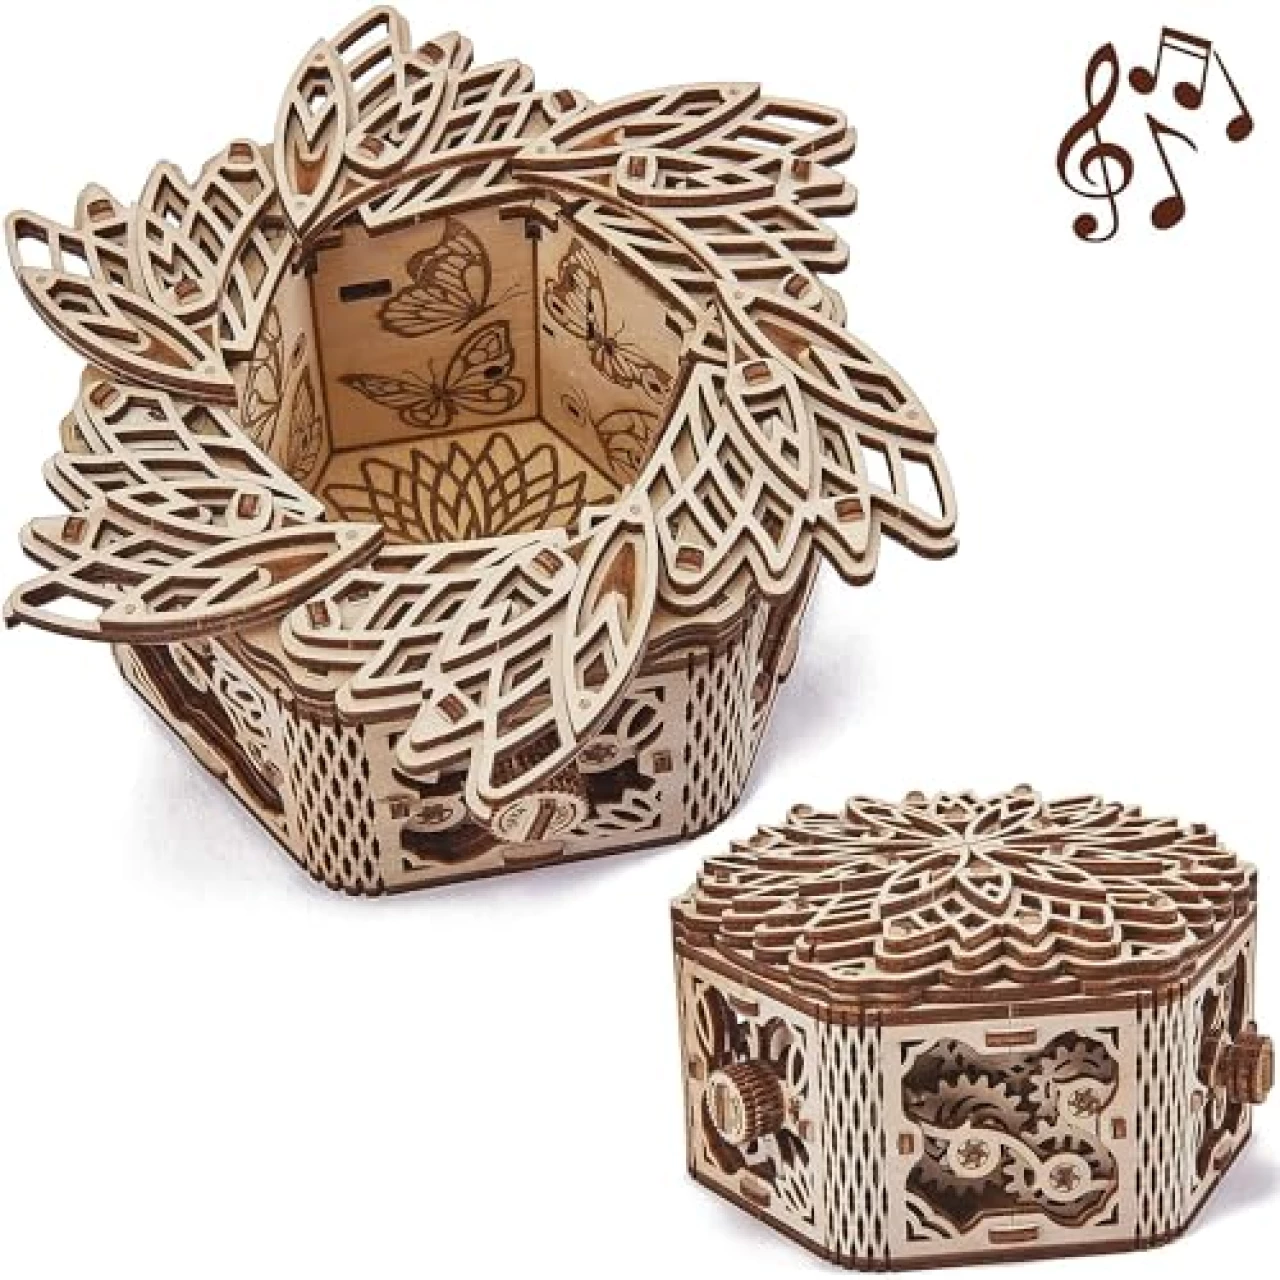 Wood Trick Mystery Flower Für Elise Wooden Music Box Kit - Keepsake &amp; Jewelry Box - 3D Wooden Puzzle